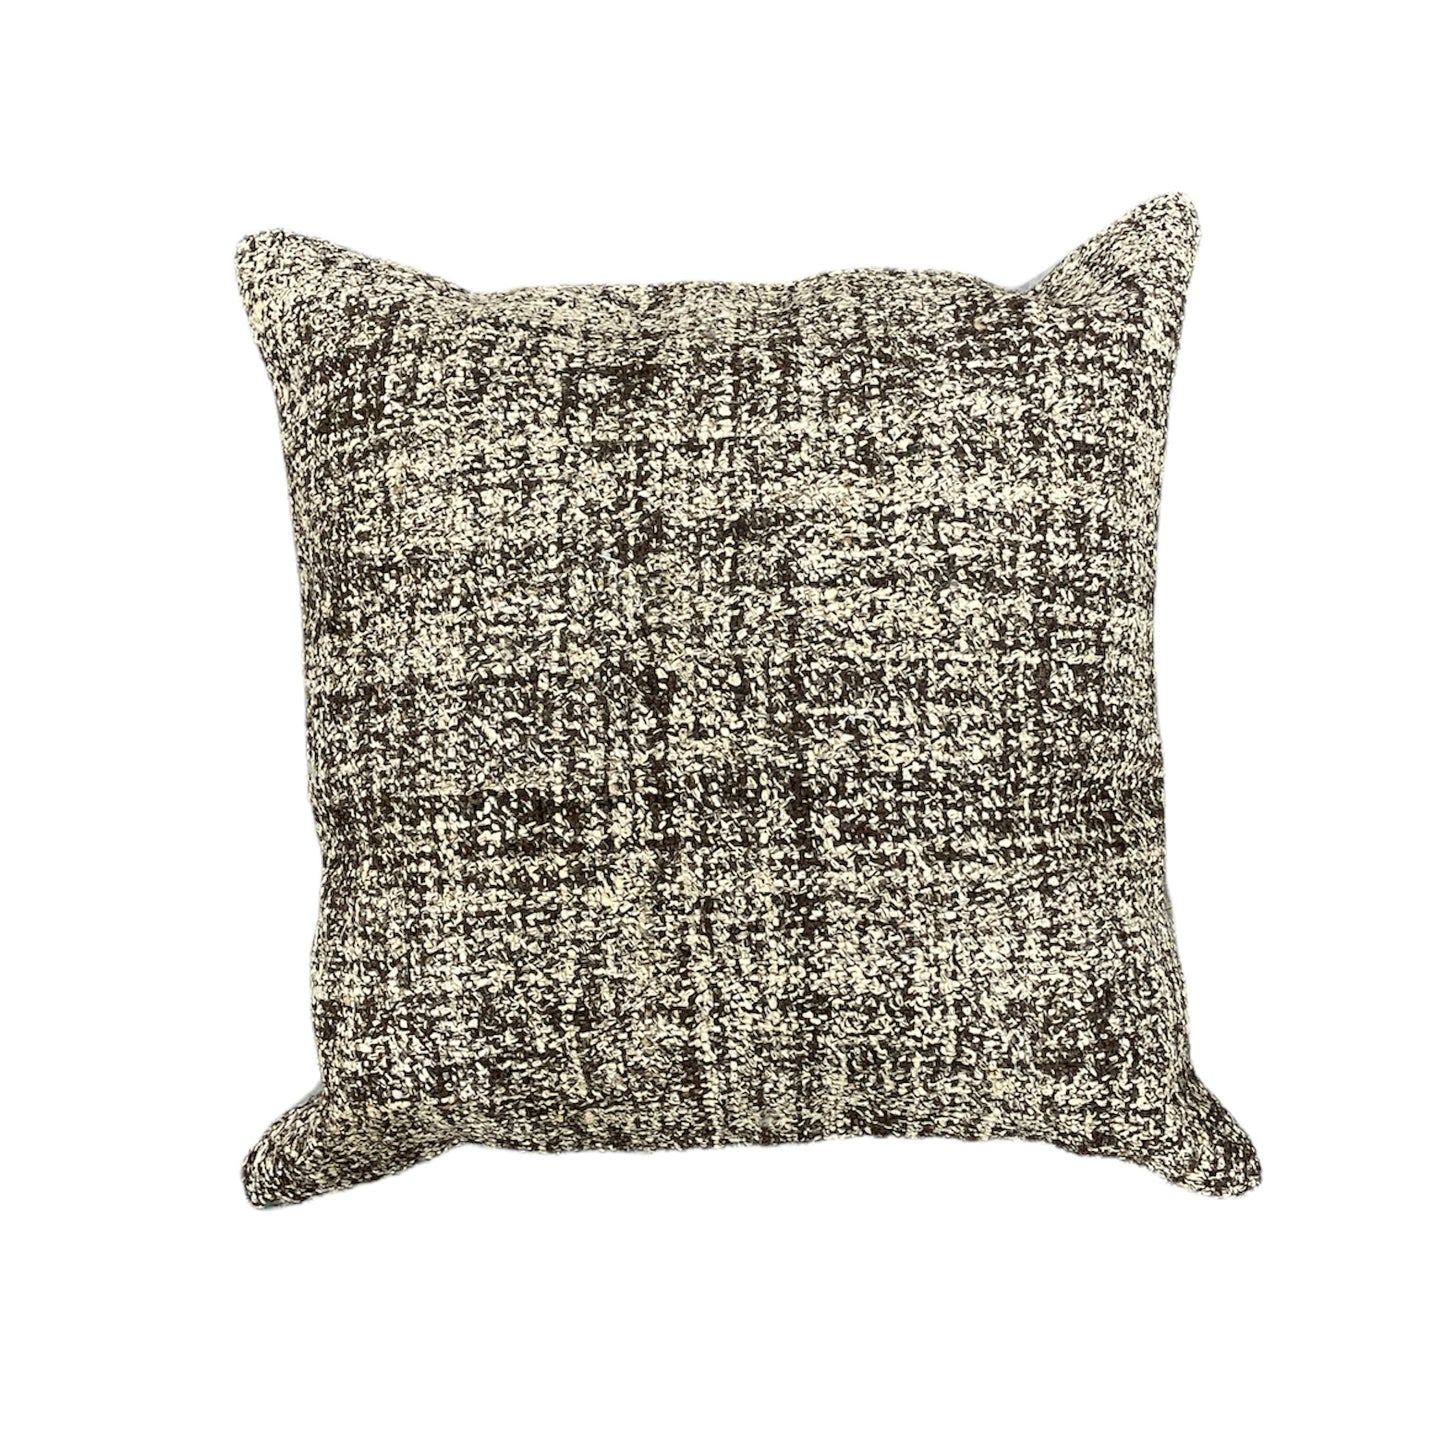 Poko Texture Pillows